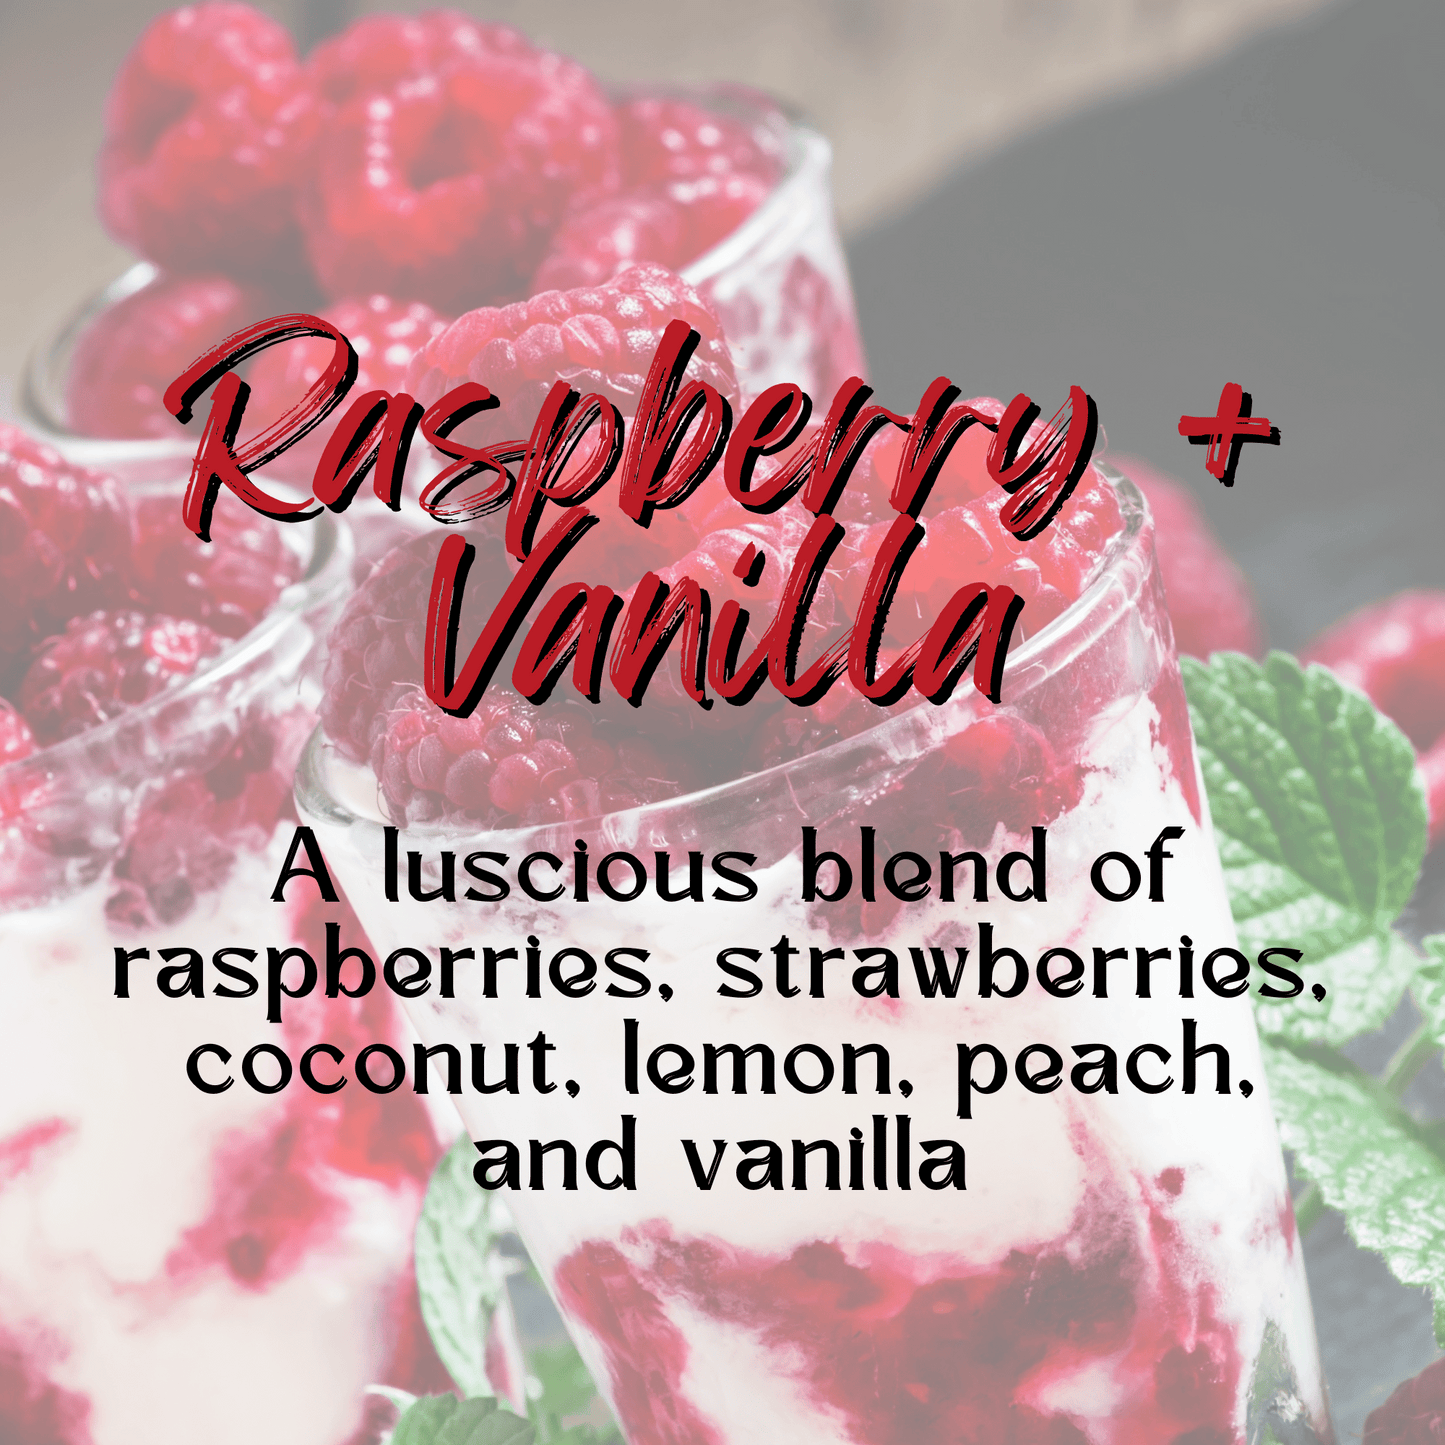 Hydrating Body + Hair Mist | Raspberry + Vanilla | Choice of Size | Spray